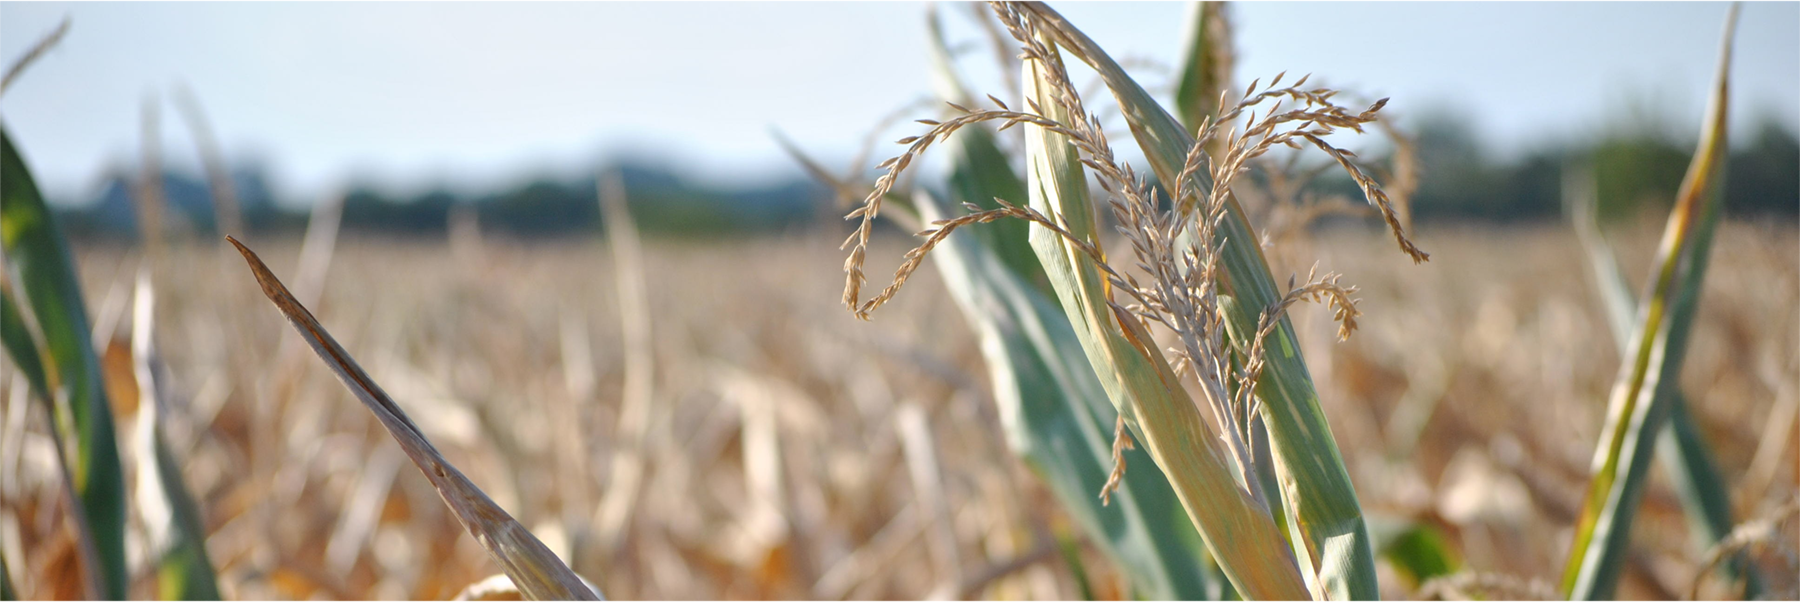 Dry cornfield, credit: pxhere.com